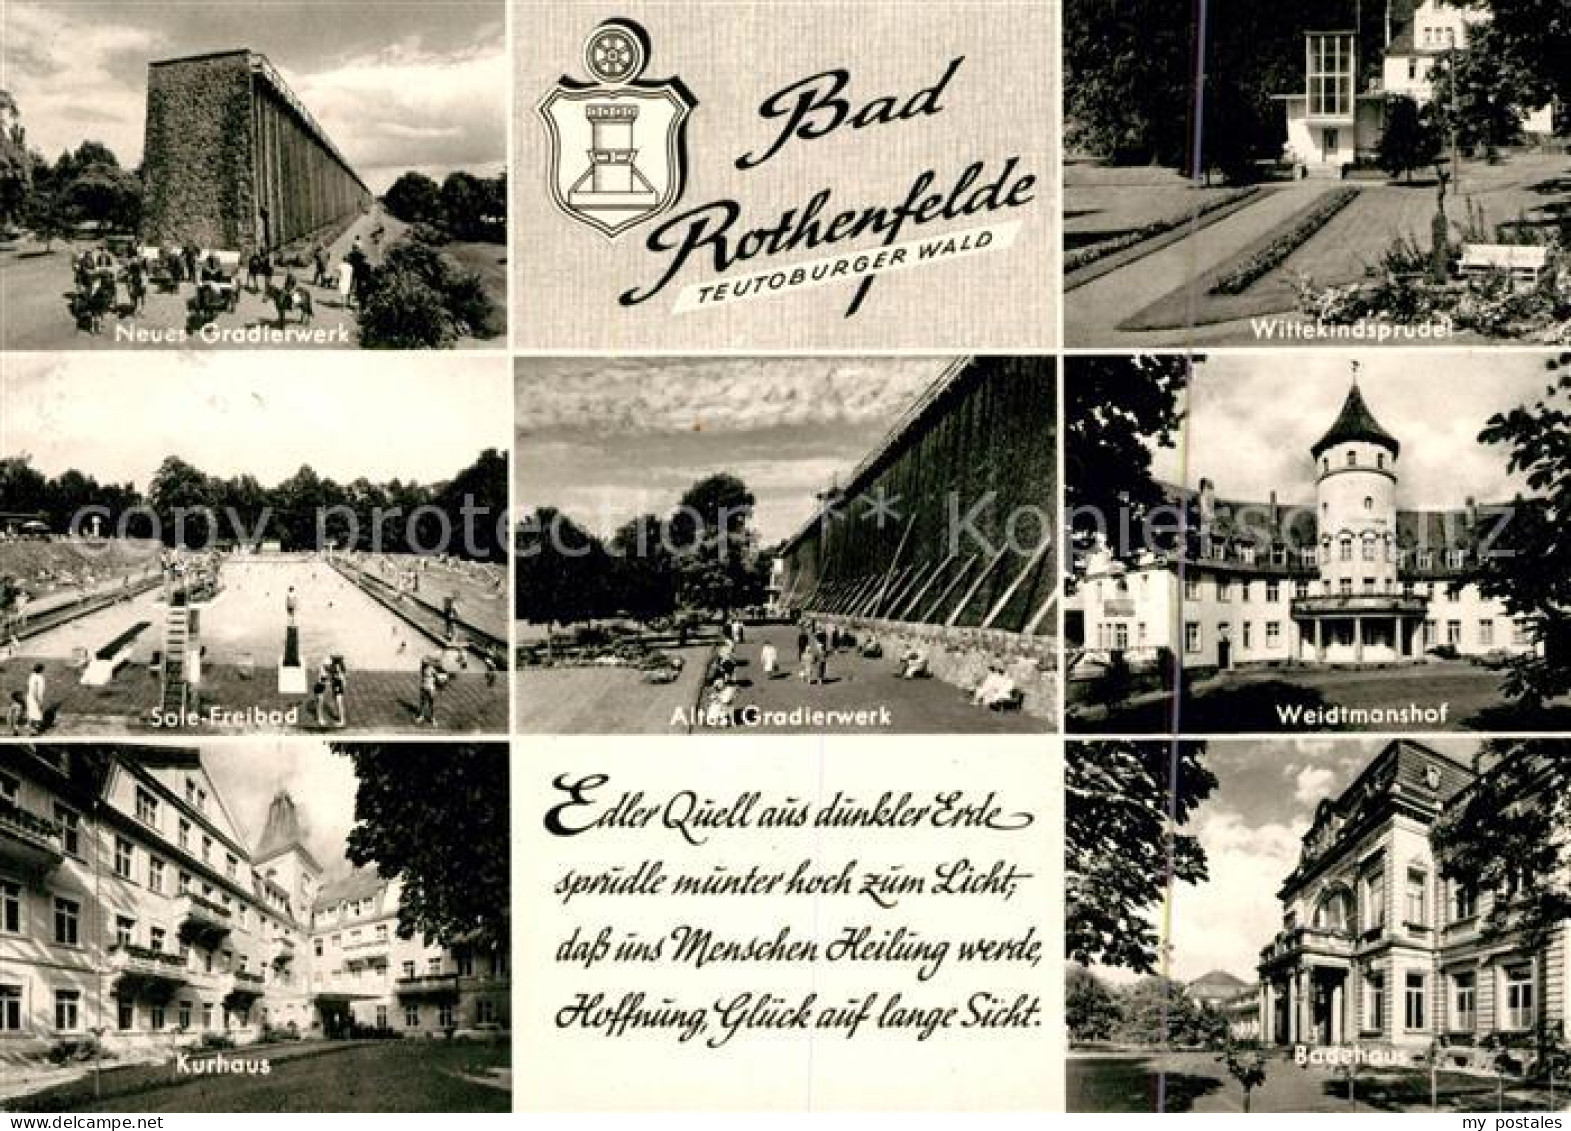 73105054 Bad Rothenfelde Neues Gradierwerk Wittekindsprudel Sole Freibad Weidtma - Bad Rothenfelde